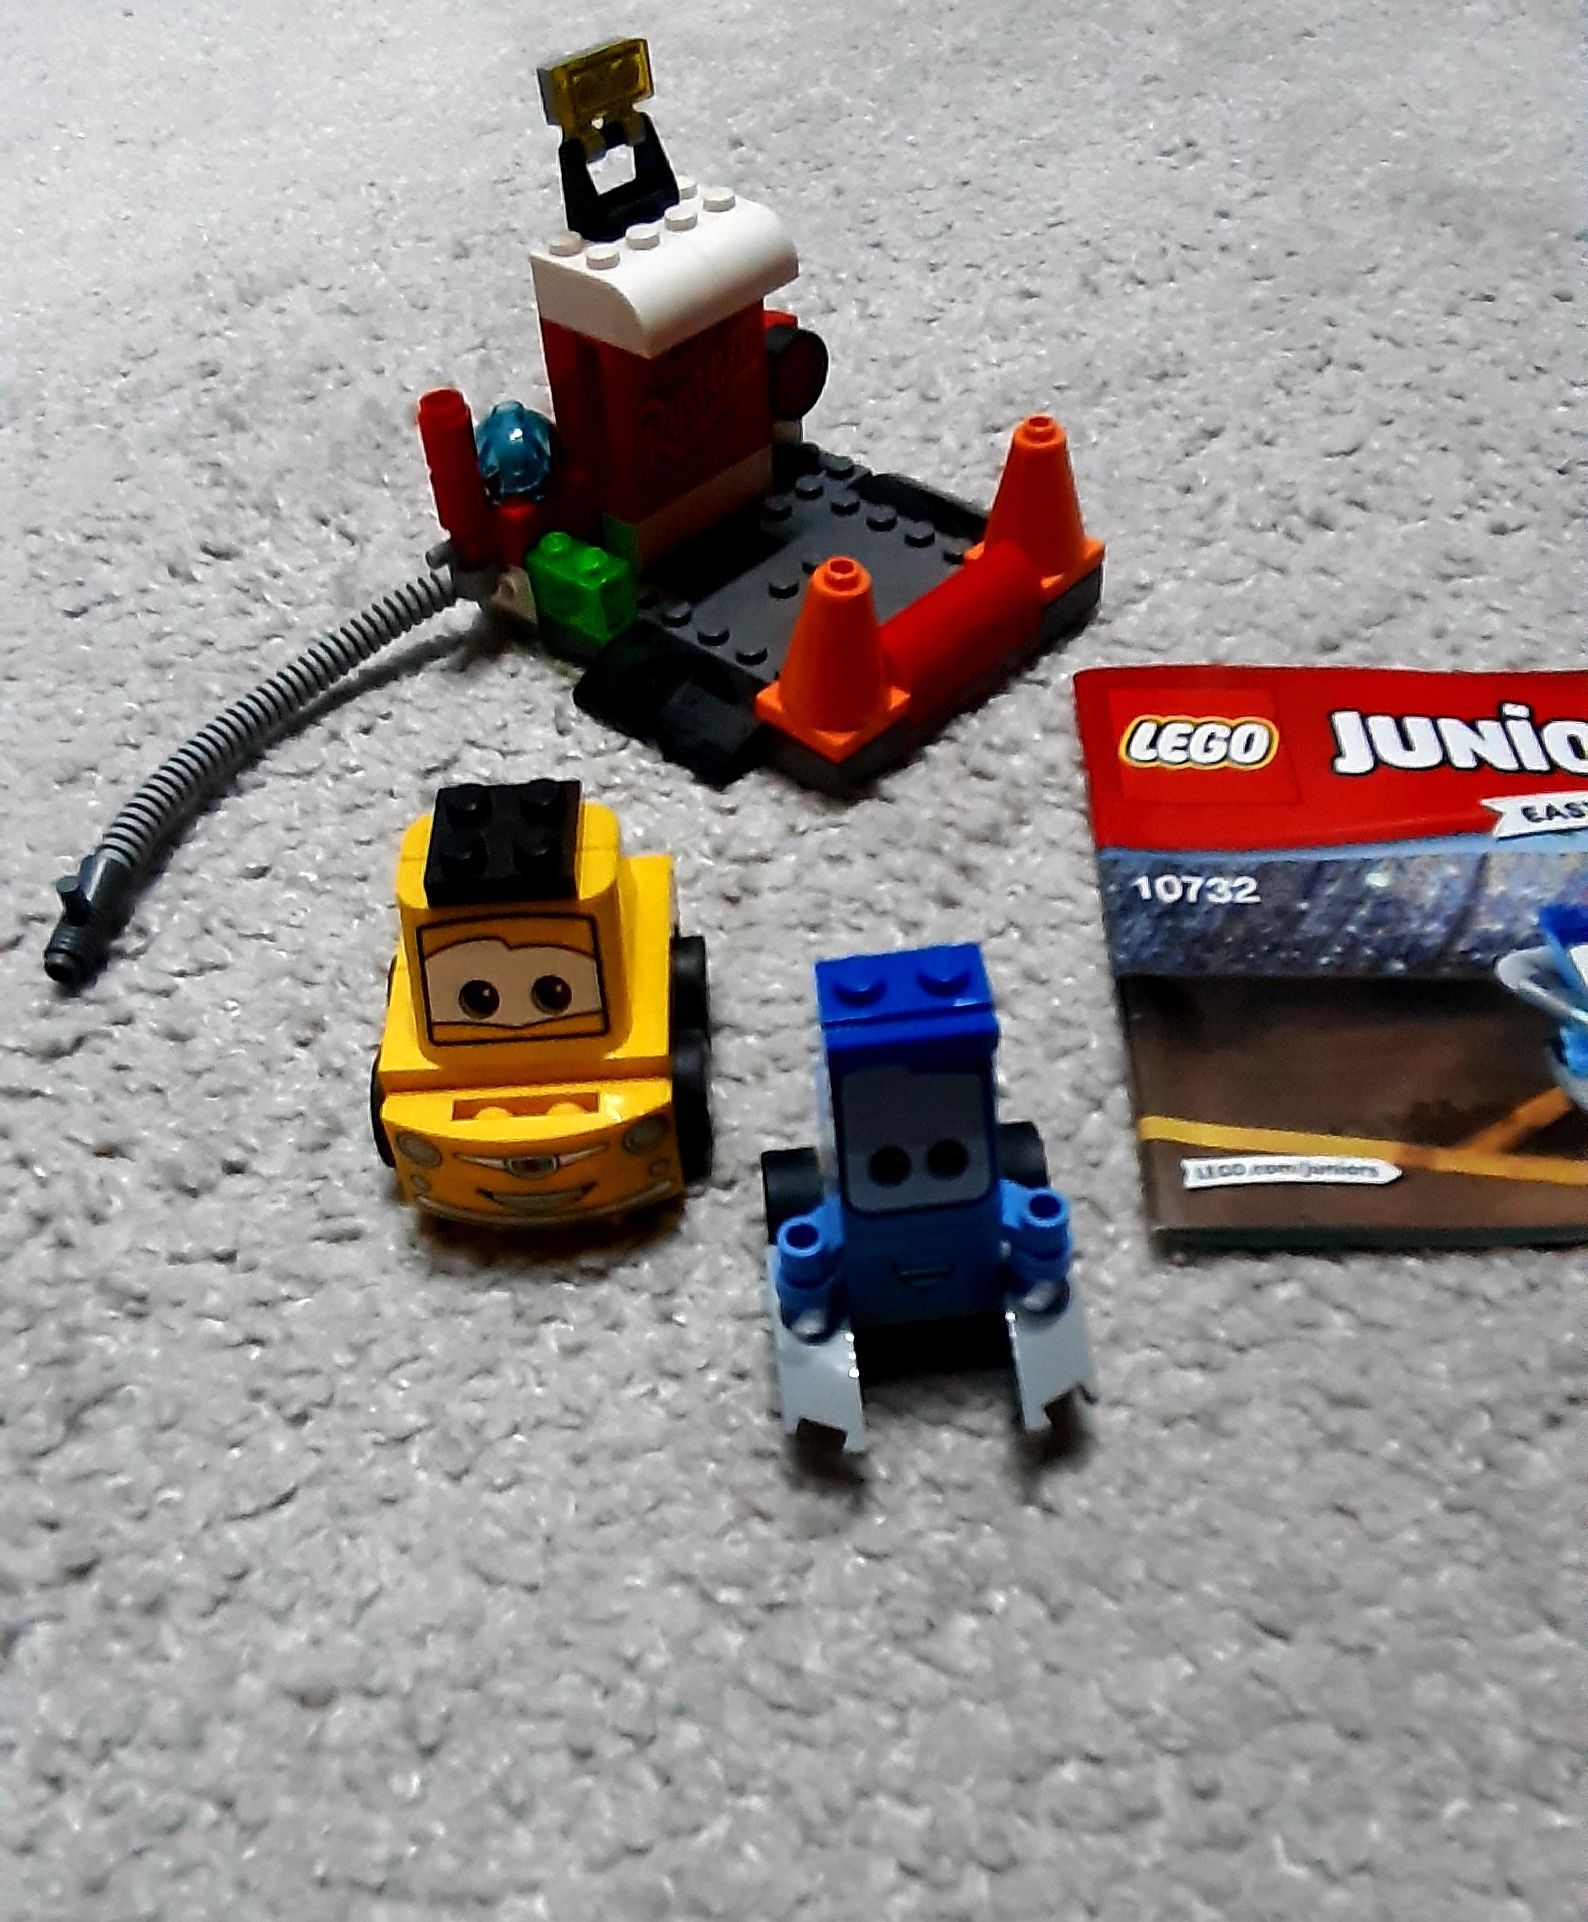 LEGO JUNIORS Punkt serwisowy 10732